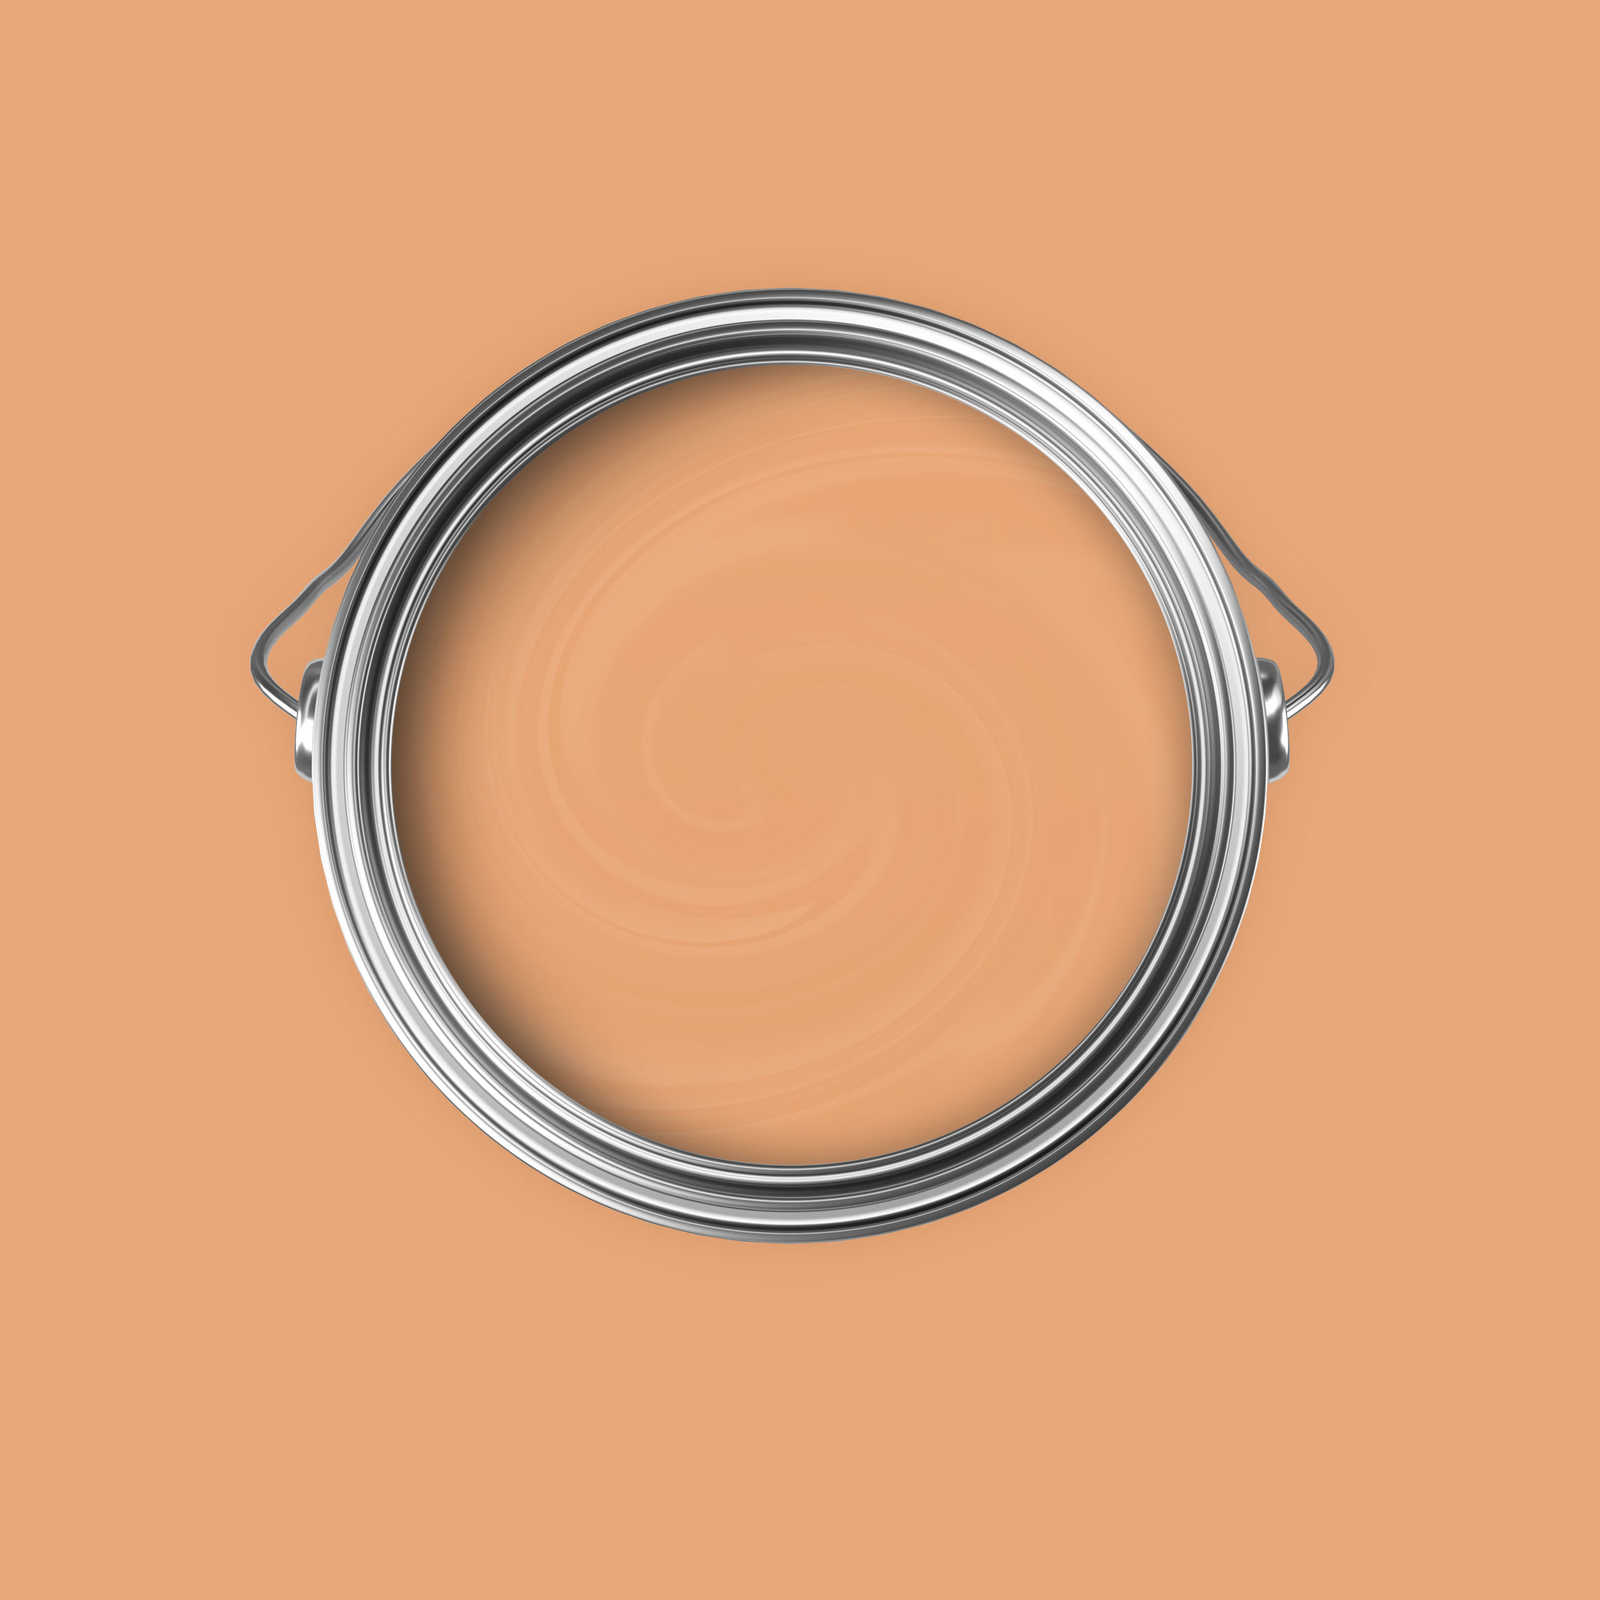             Premium Wall Paint Awakening Apricot »Pretty Peach« NW901 – 5 litre
        